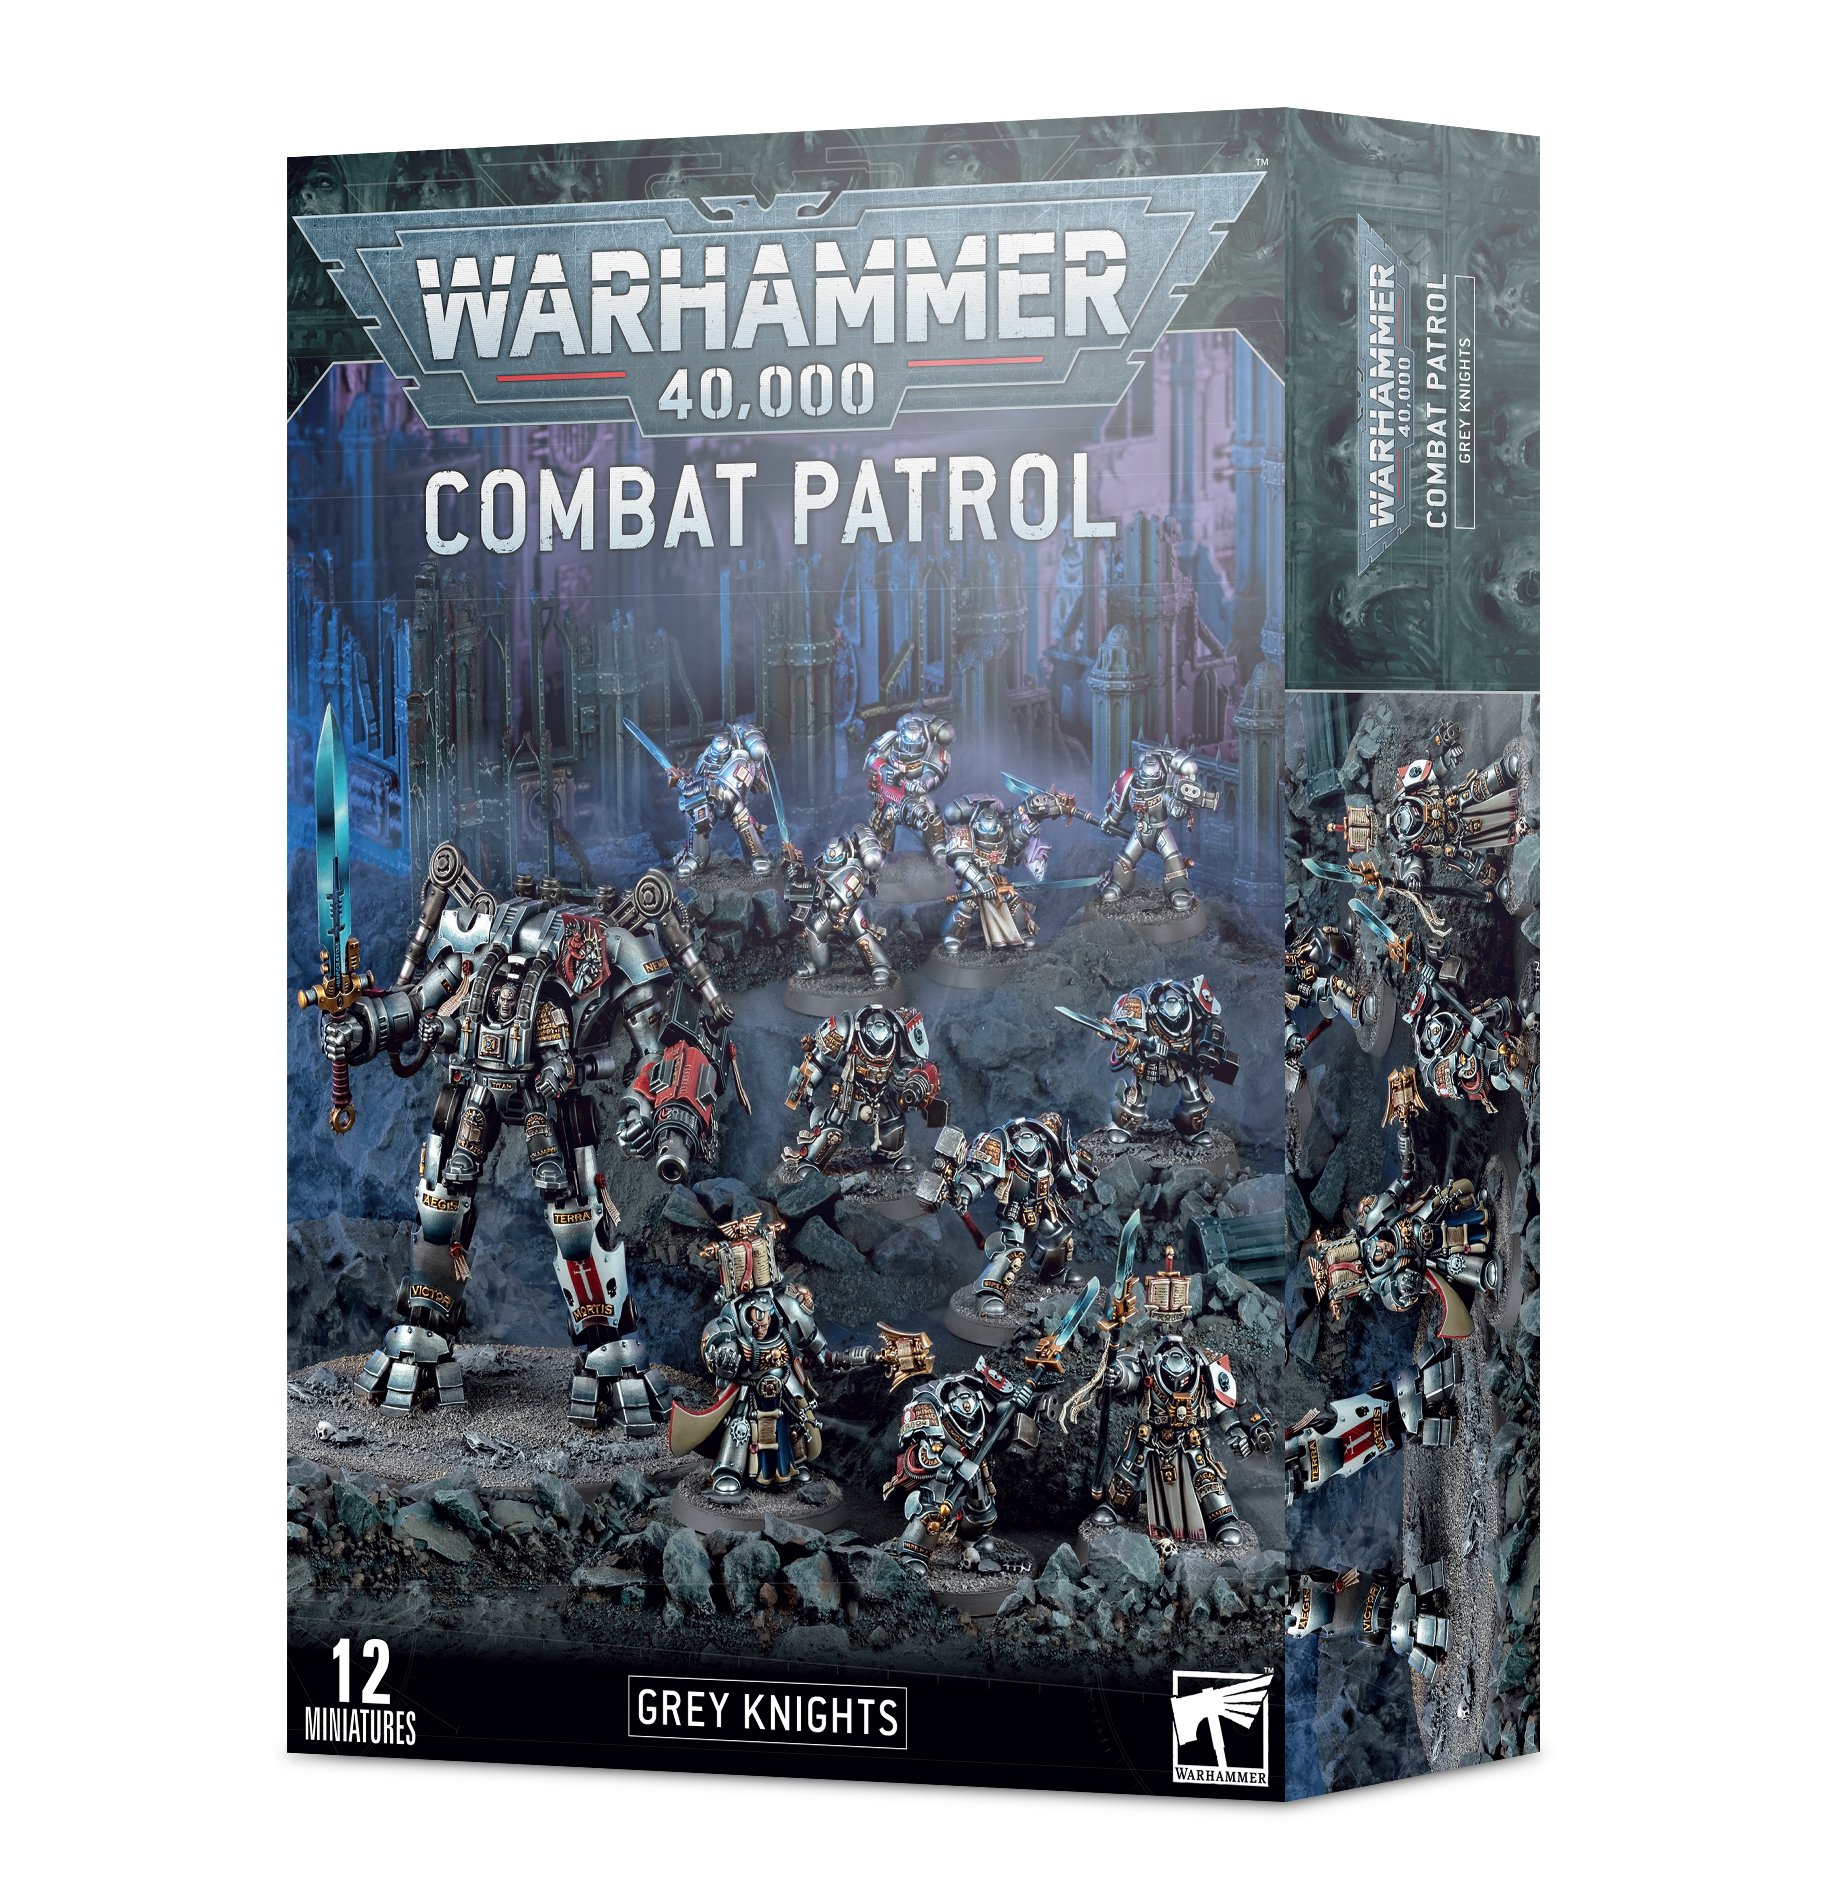 combat patrol grey knights box